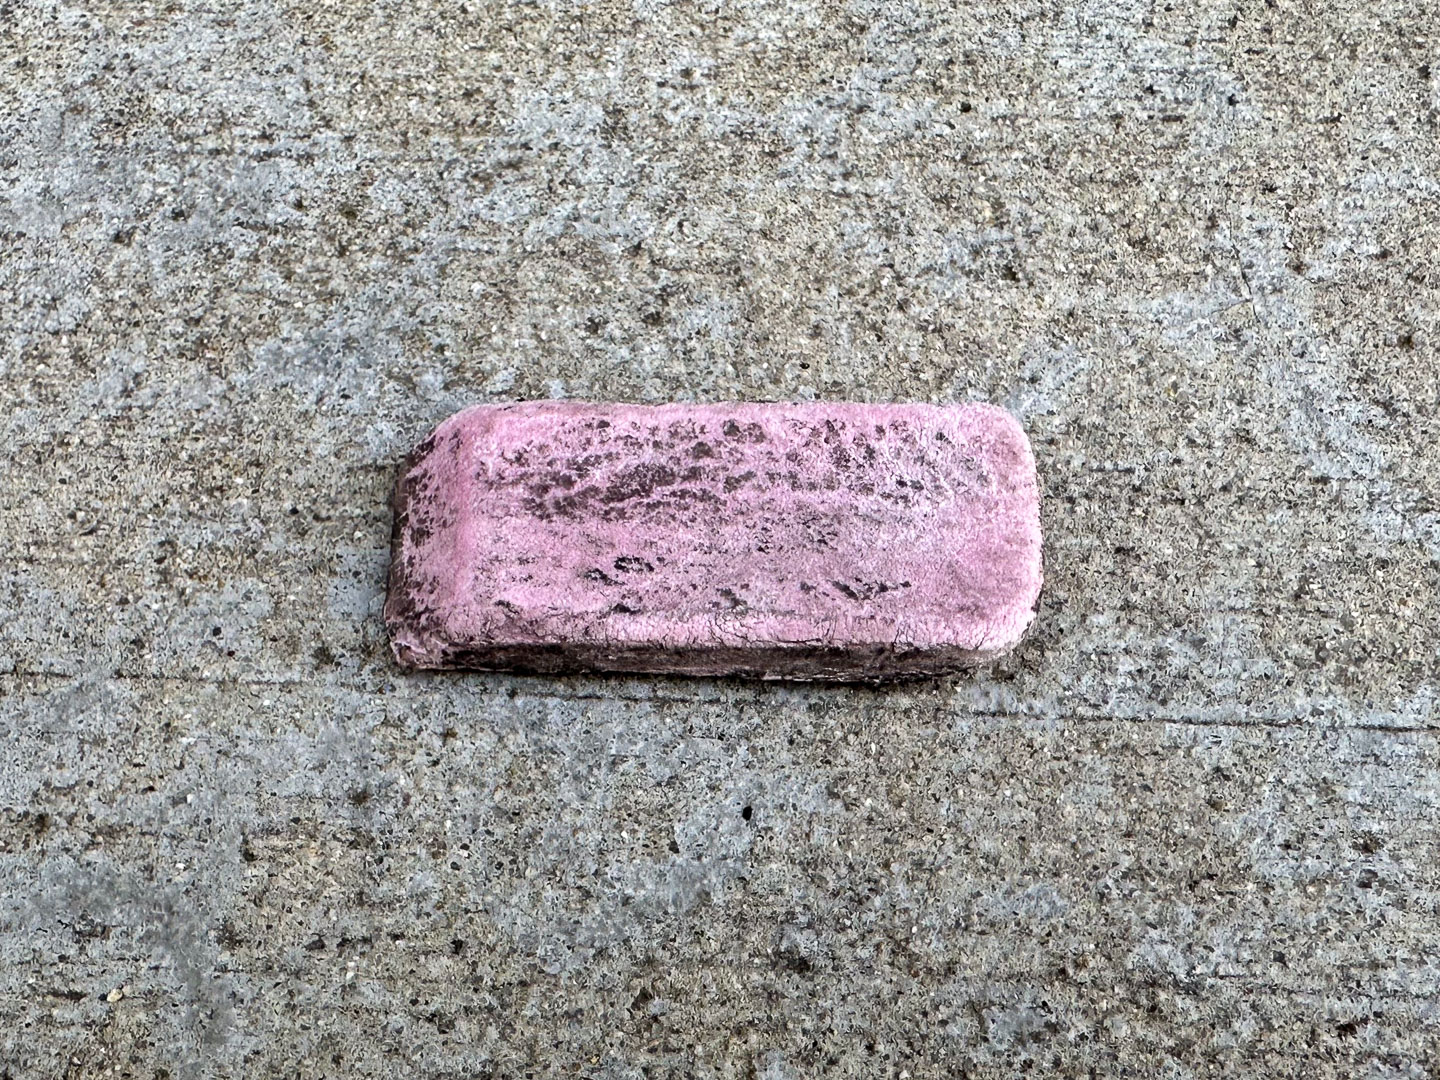 Scuffed-up pink eraser